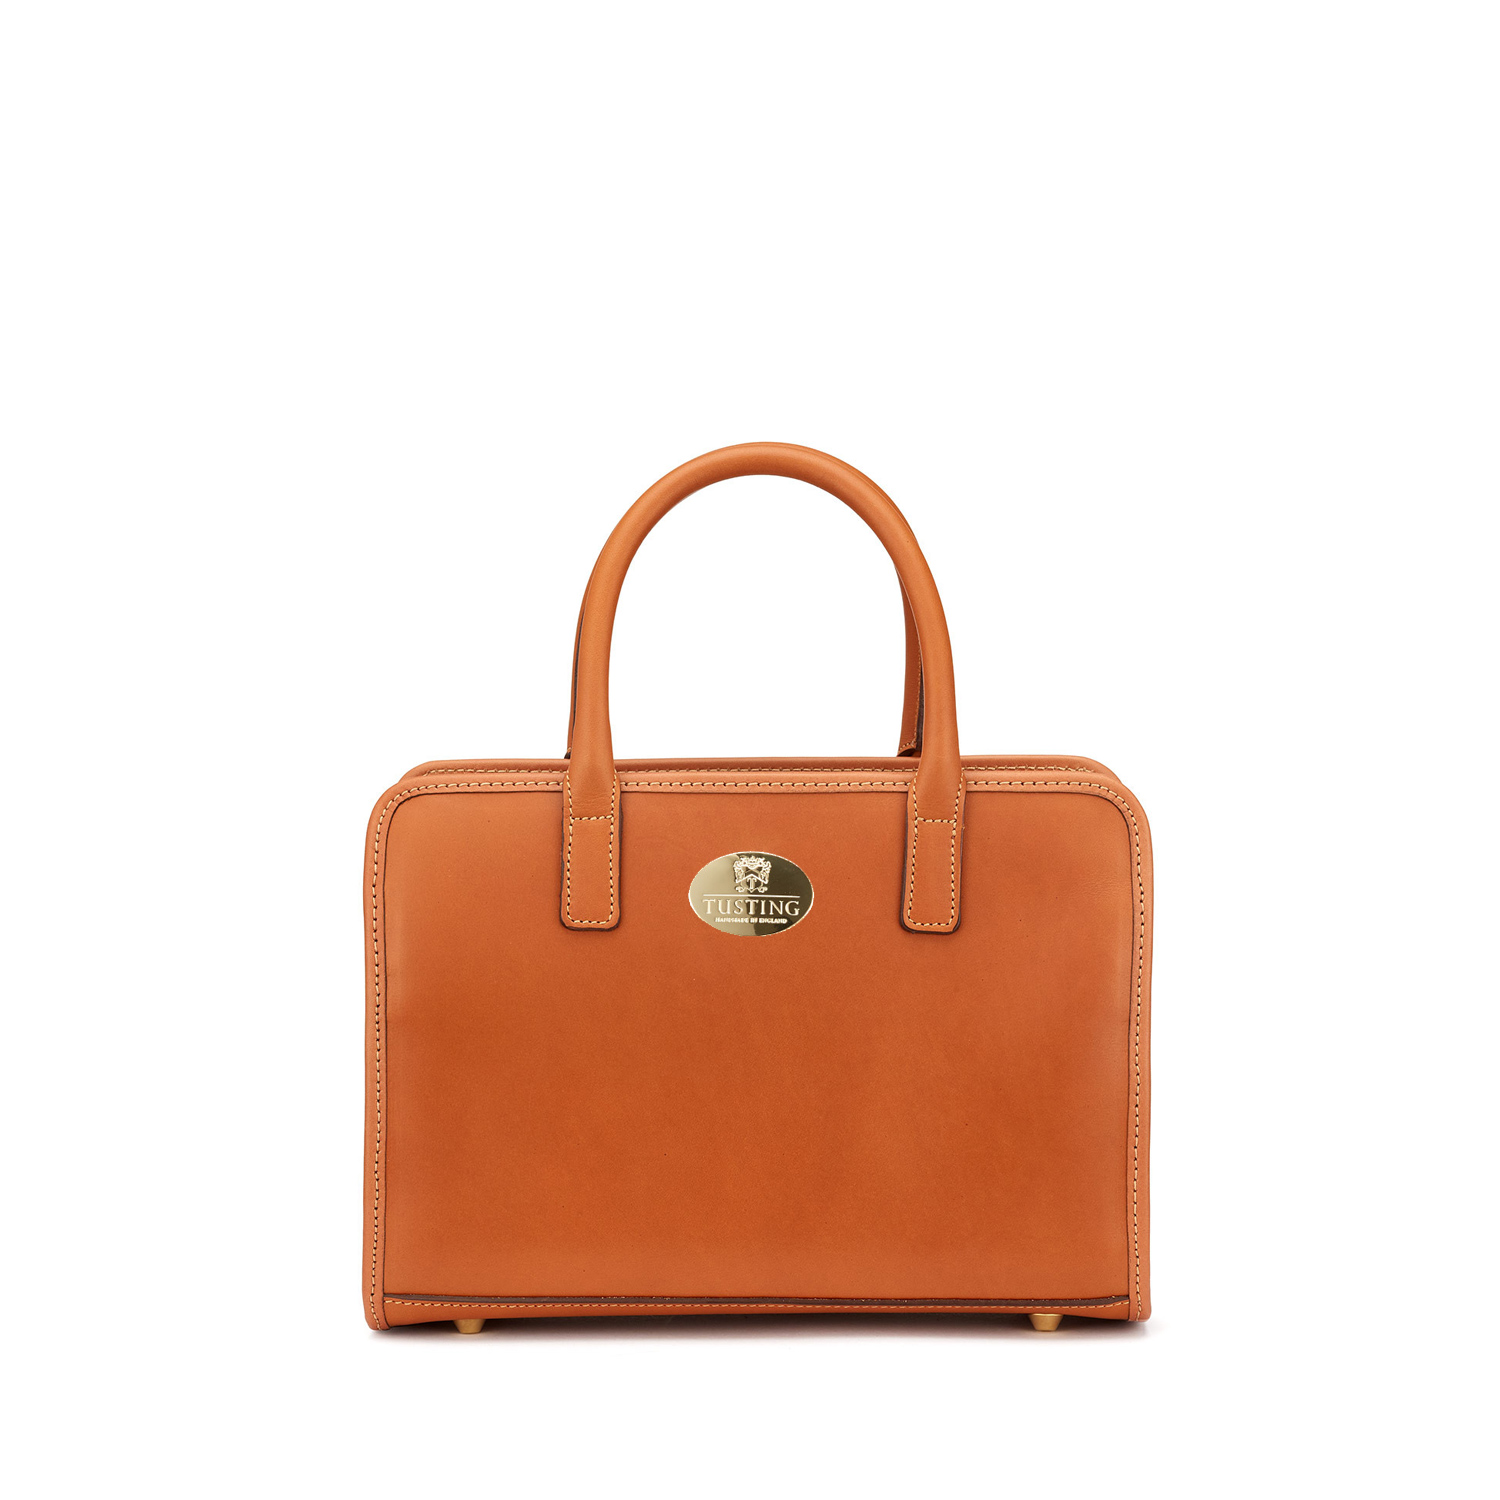 Shop Catherinr Leather Doctors Bag | Ladies Briefcase | Tusting